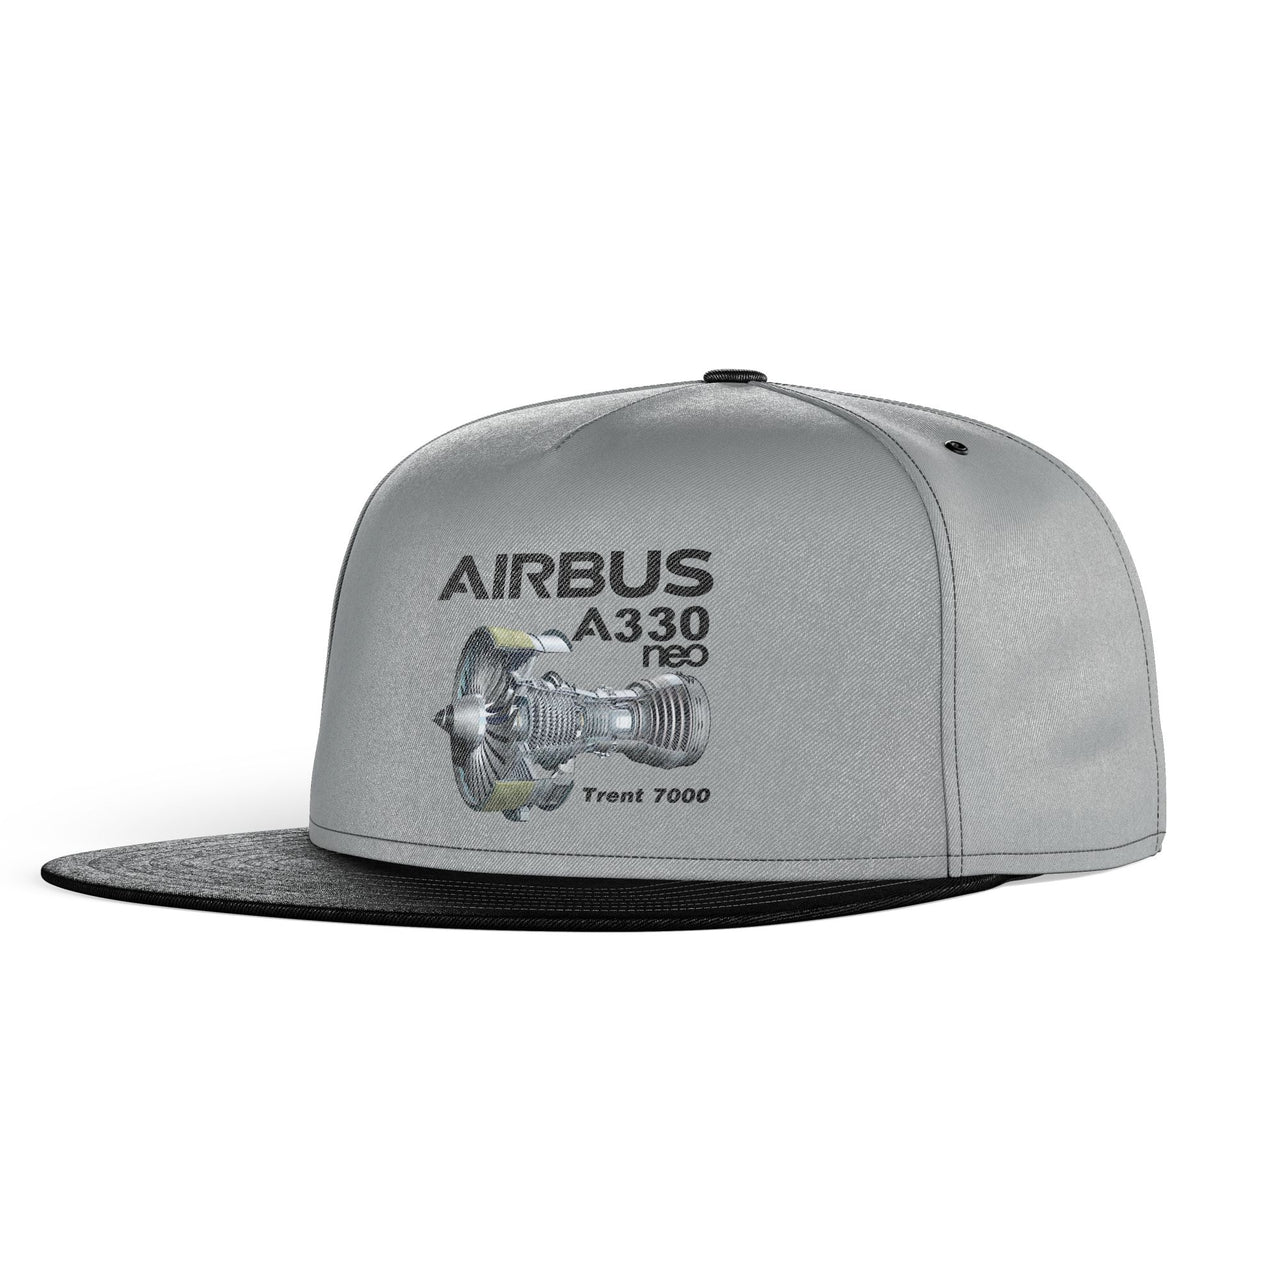 Airbus A330neo & Trent 7000 Designed Snapback Caps & Hats